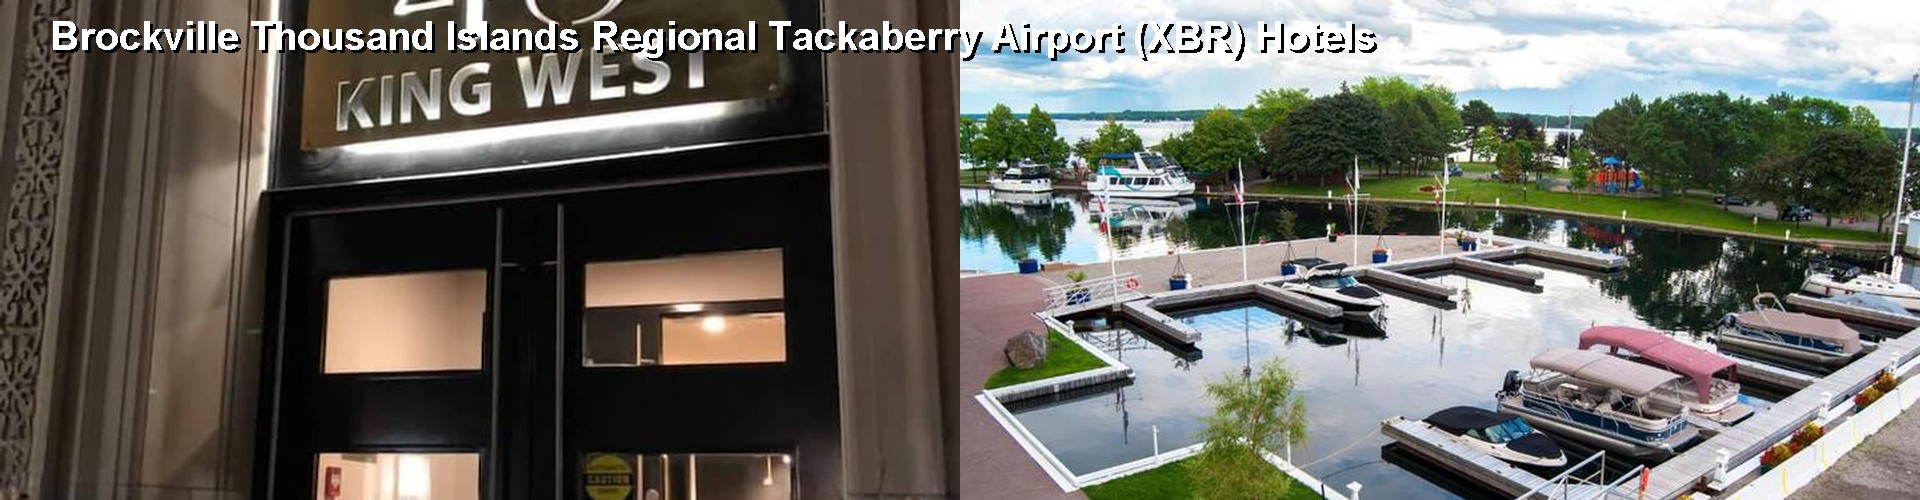 4 Best Hotels near Brockville Thousand Islands Regional Tackaberry Airport (XBR)